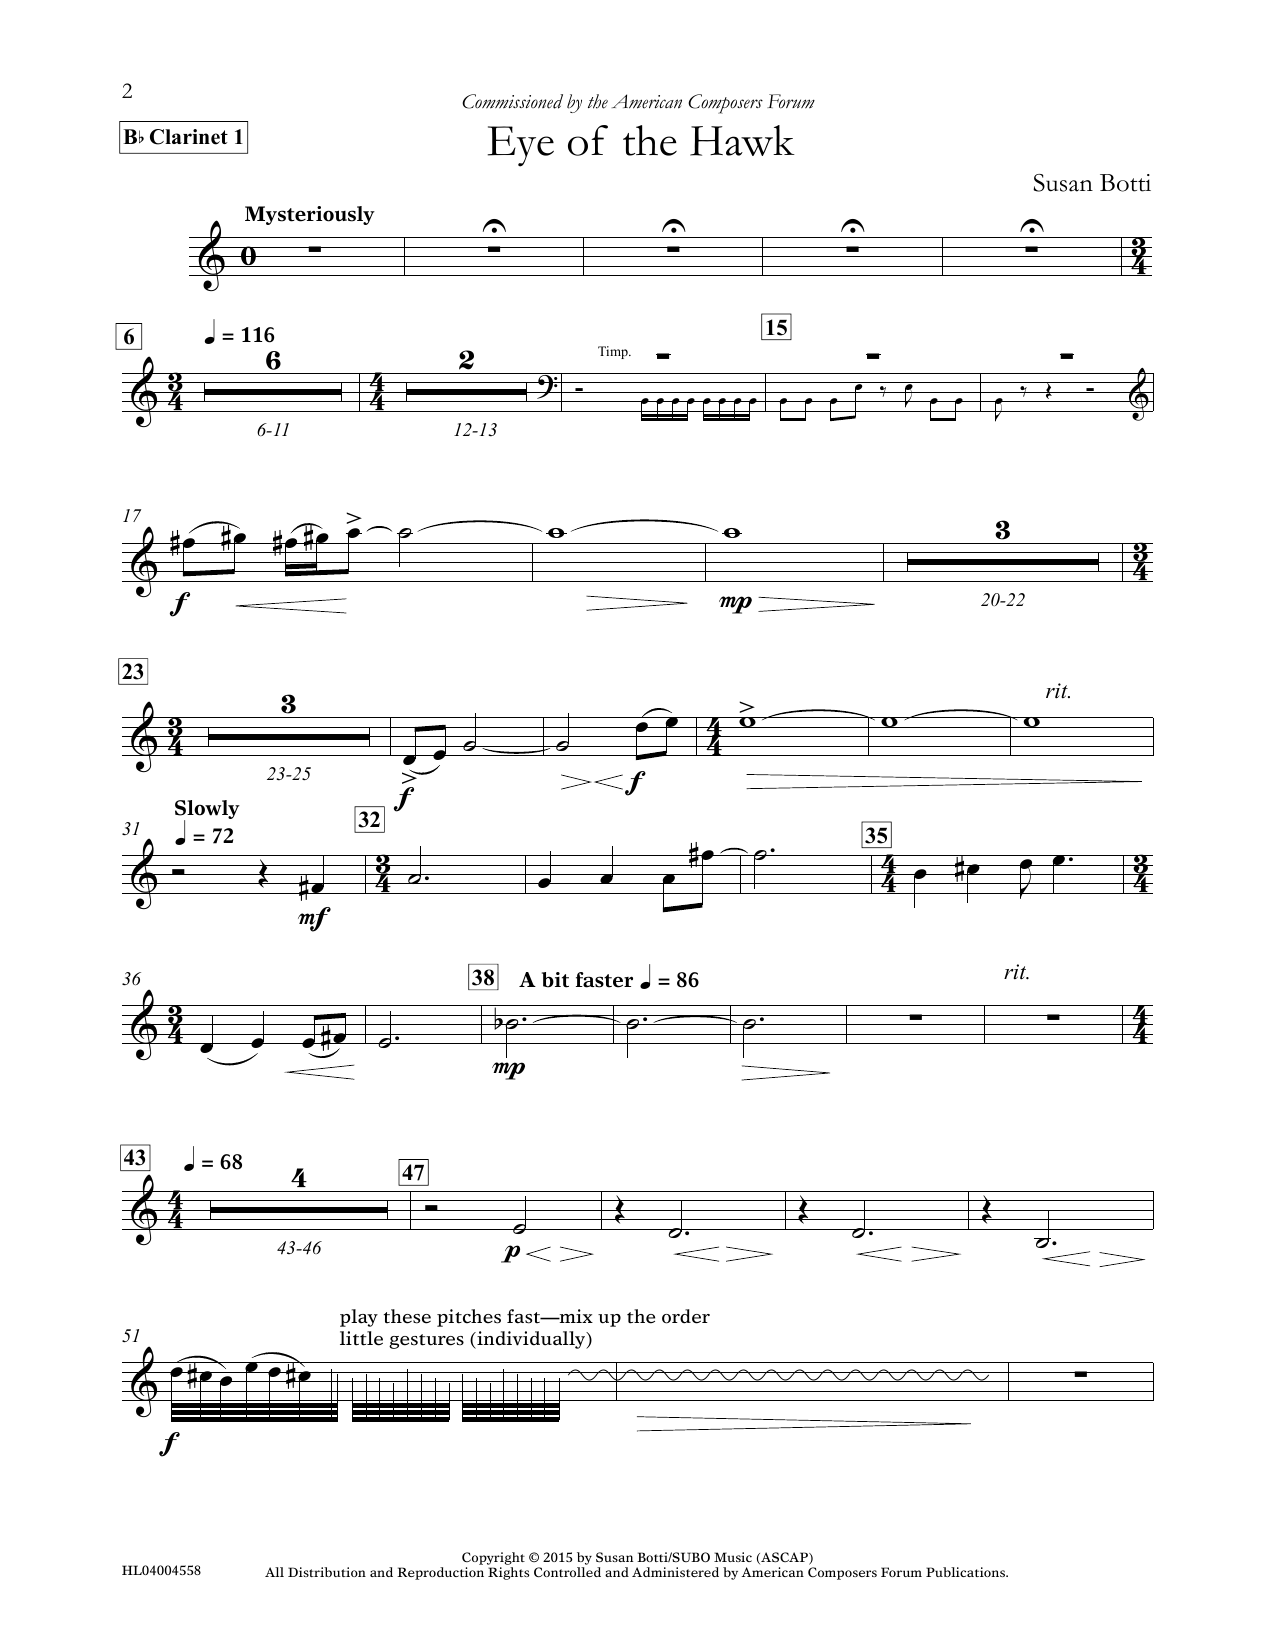 Download Susan Botti Eye of the Hawk - Bb Clarinet 1 Sheet Music